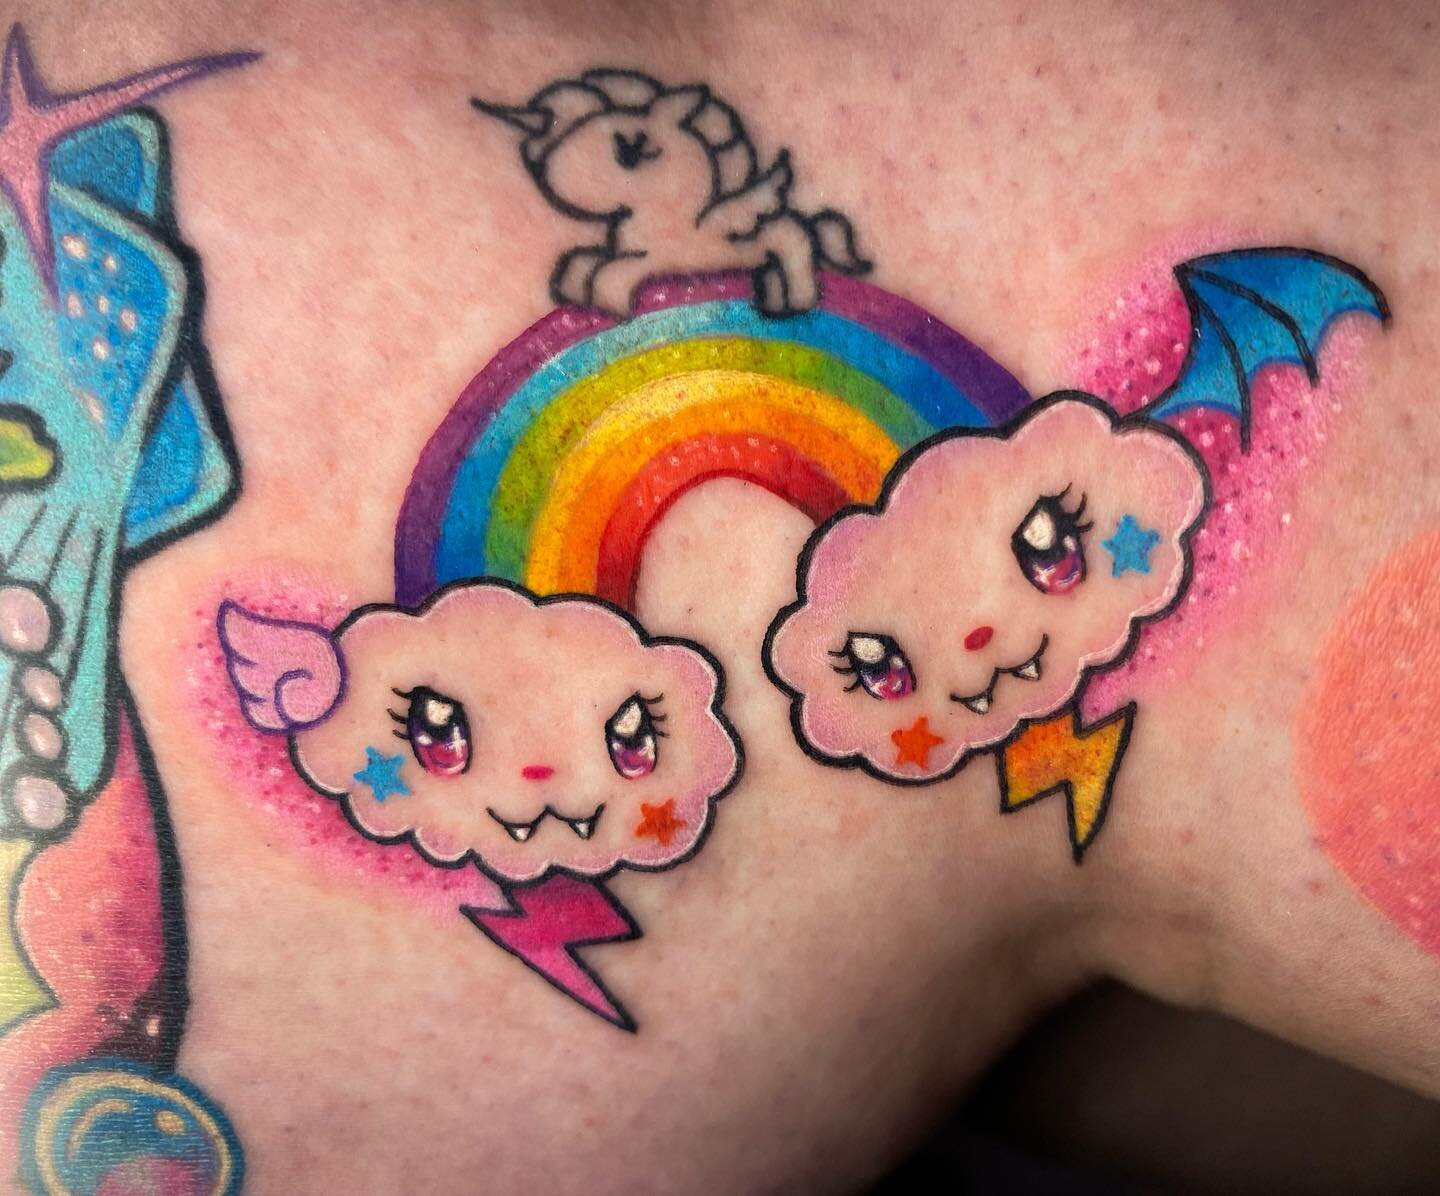 ((Unicorn not mine)) 
🌈 Added some tokidoki cuteness to this unicorn tattoo 🌈🖍️🤓

#tokidoki #cute #unicorn #rainbow #sparkles #tattoo #capecod #massachusettstattooartist #capecodtattoo #qttr #colorful